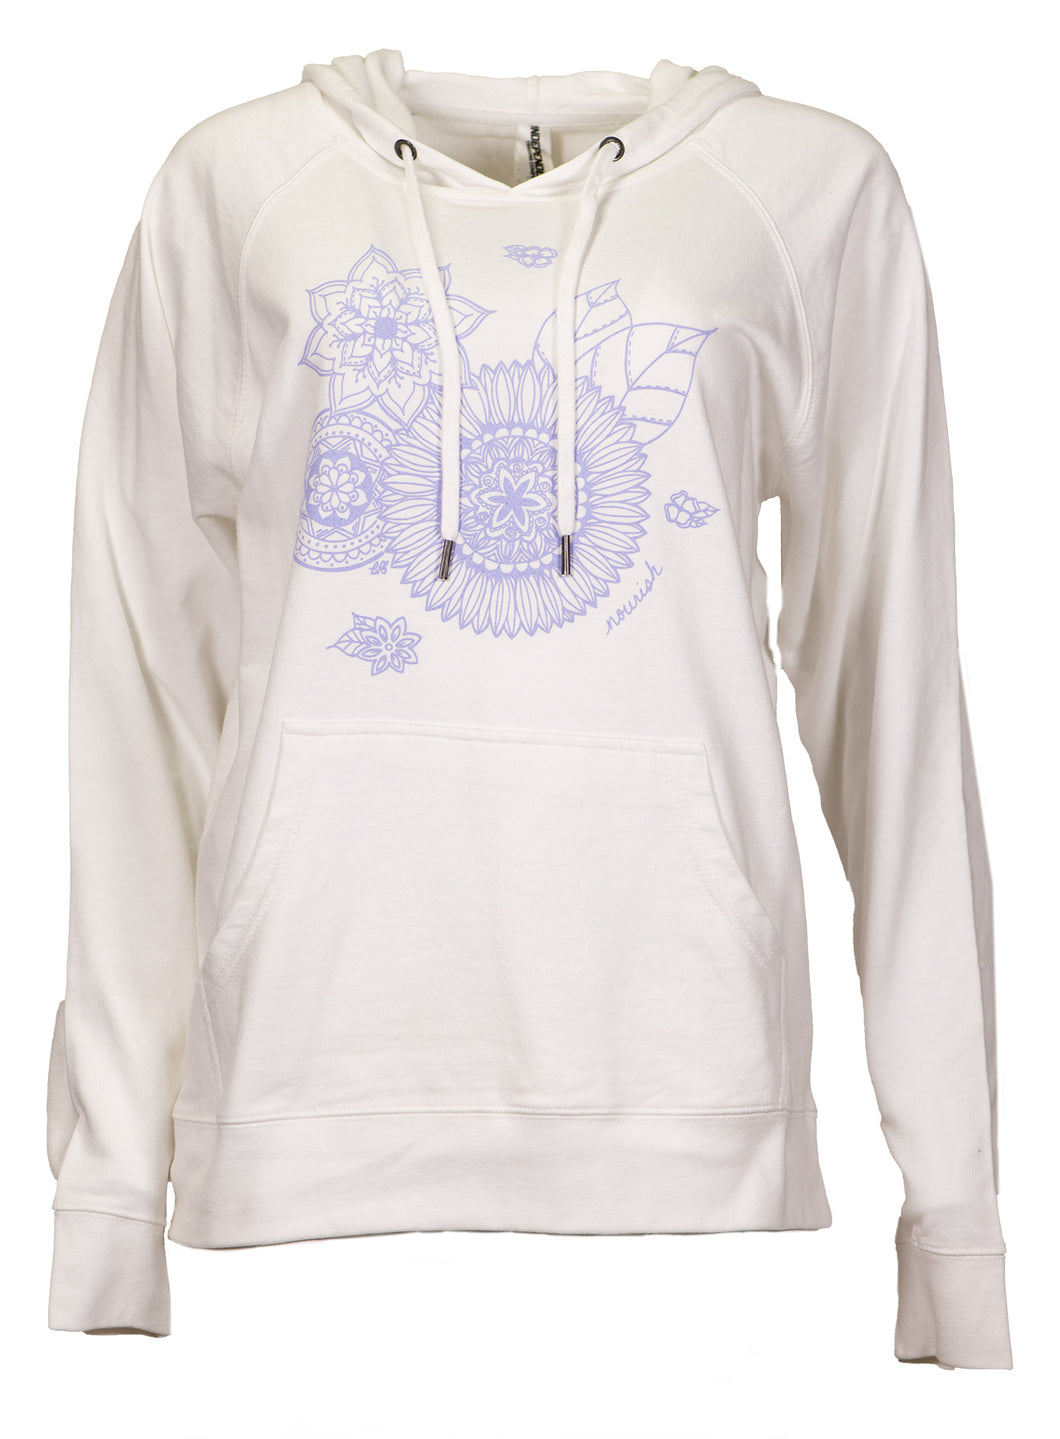 White hooded pullover sweatshirt with lavender flower based mandala design 